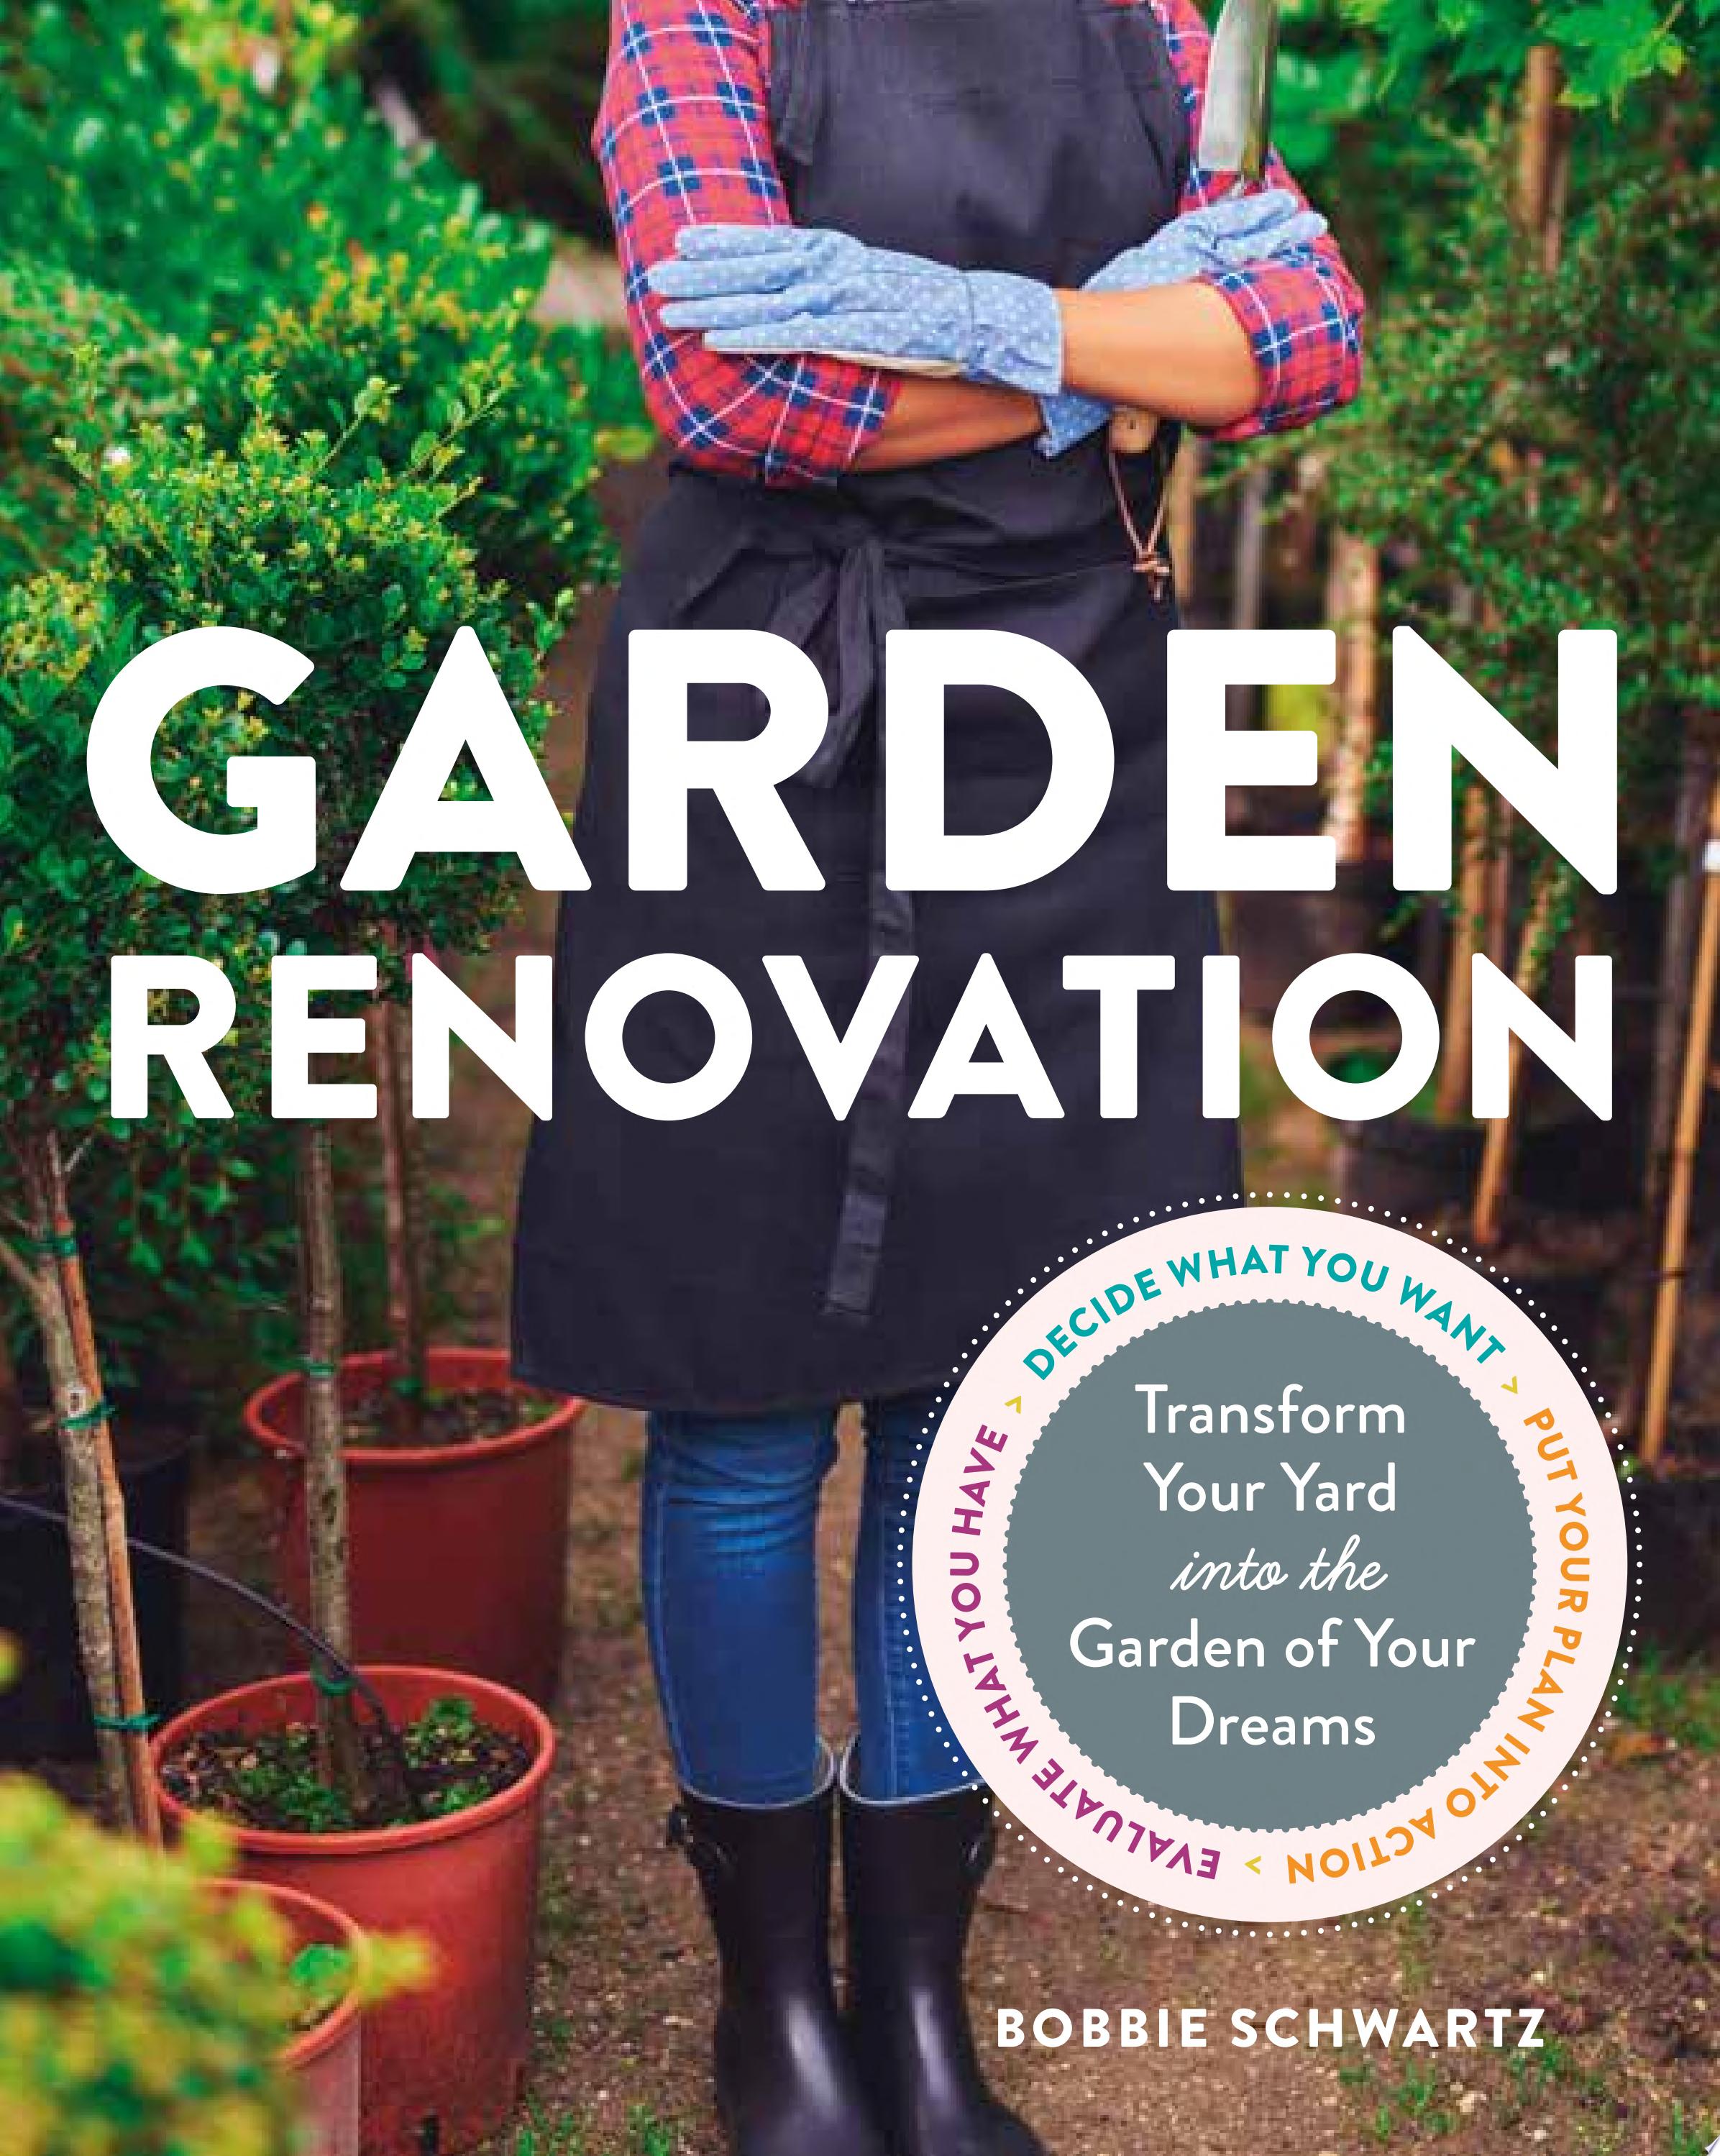 Image for "Garden Renovation"